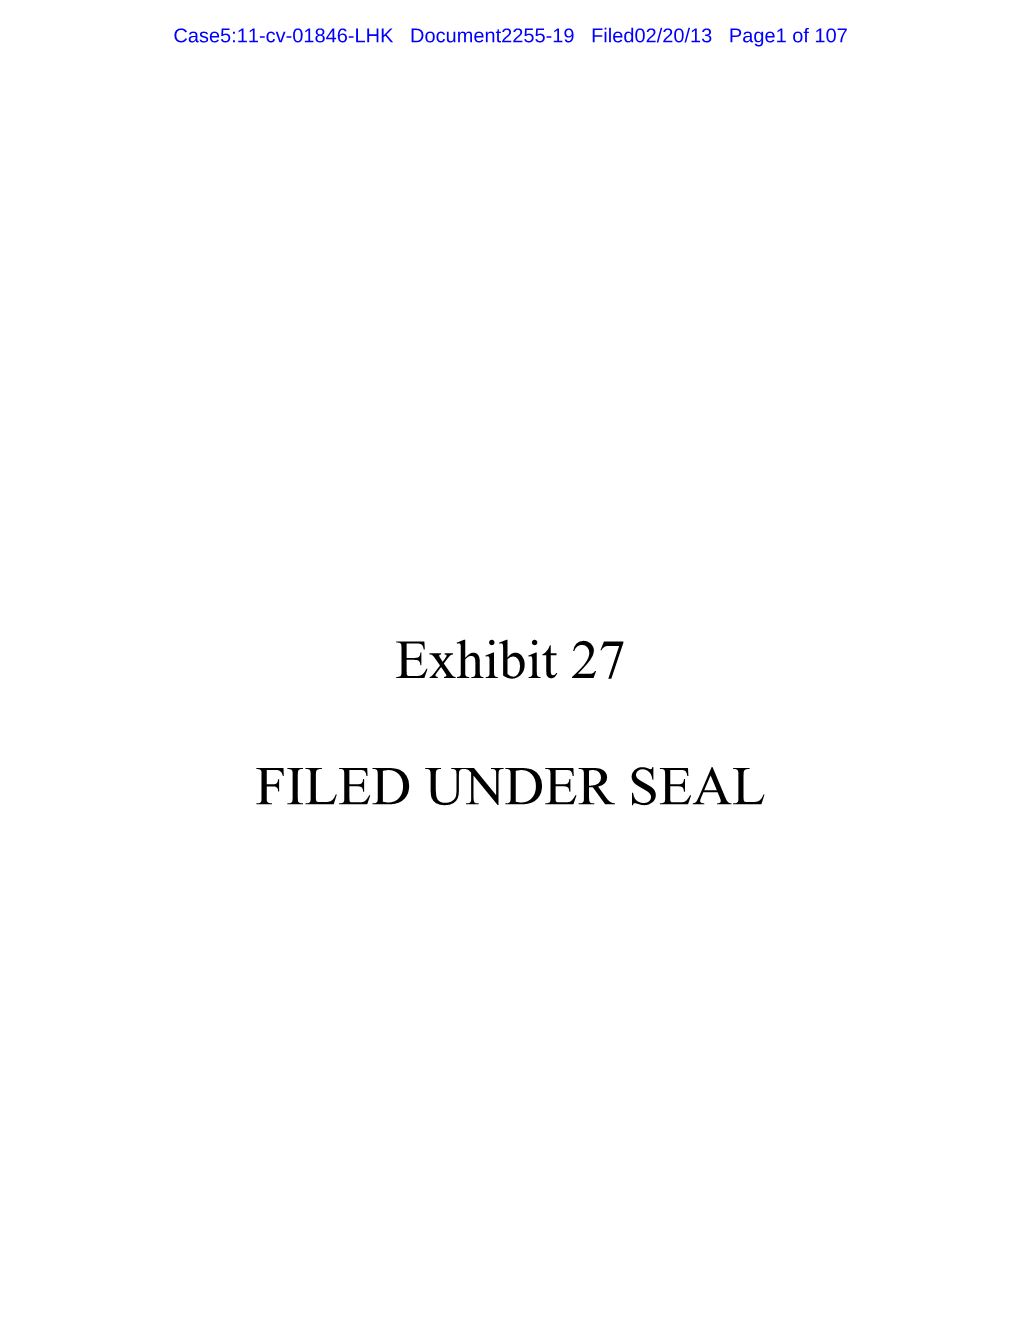 Exhibit 27 FILED UNDER SEAL